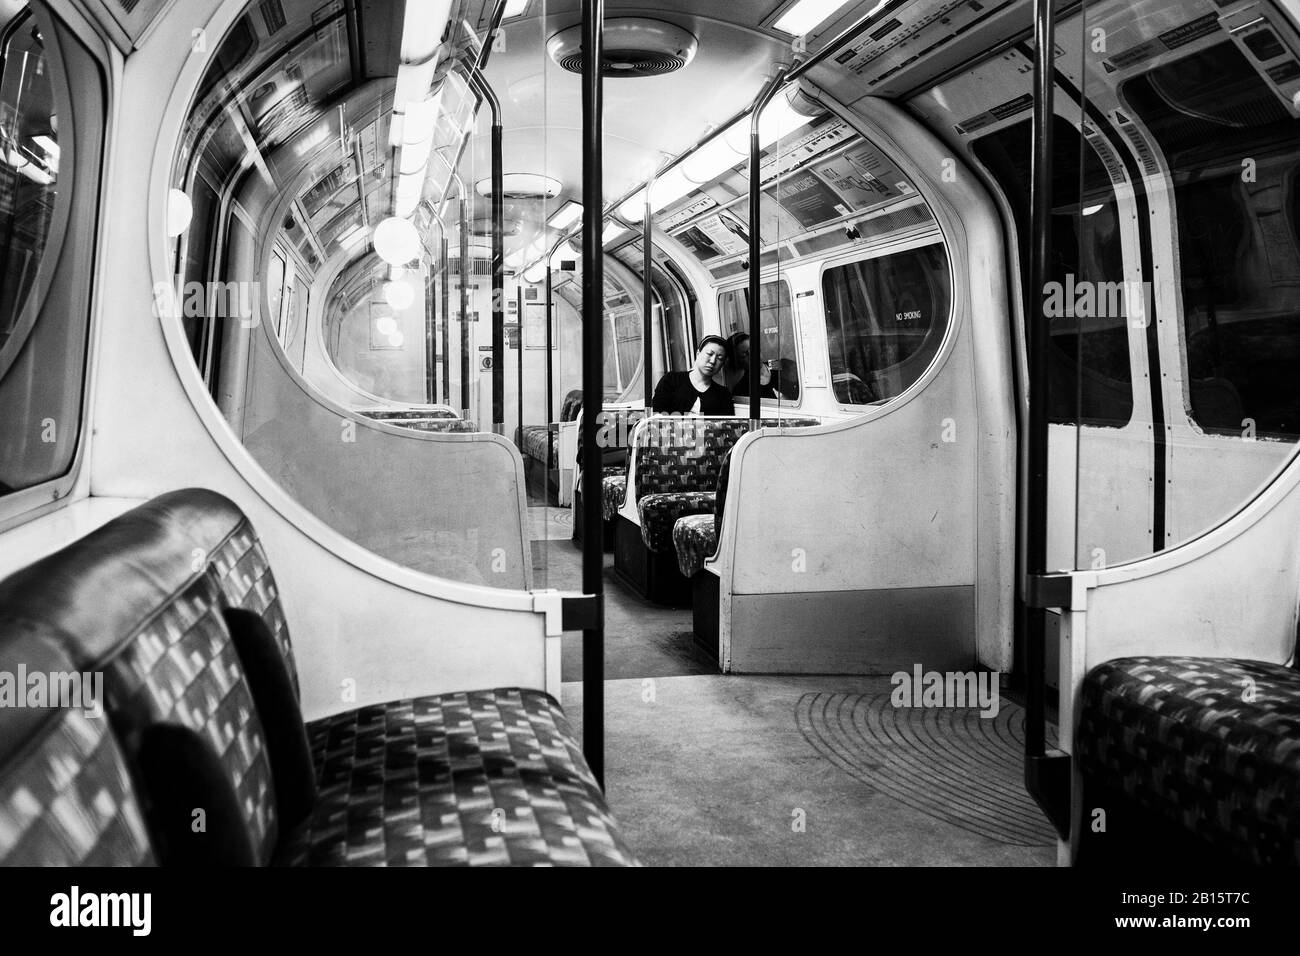 London black and white urban photography: Lone woman sleeping on Underground train, London, UK Stock Photo